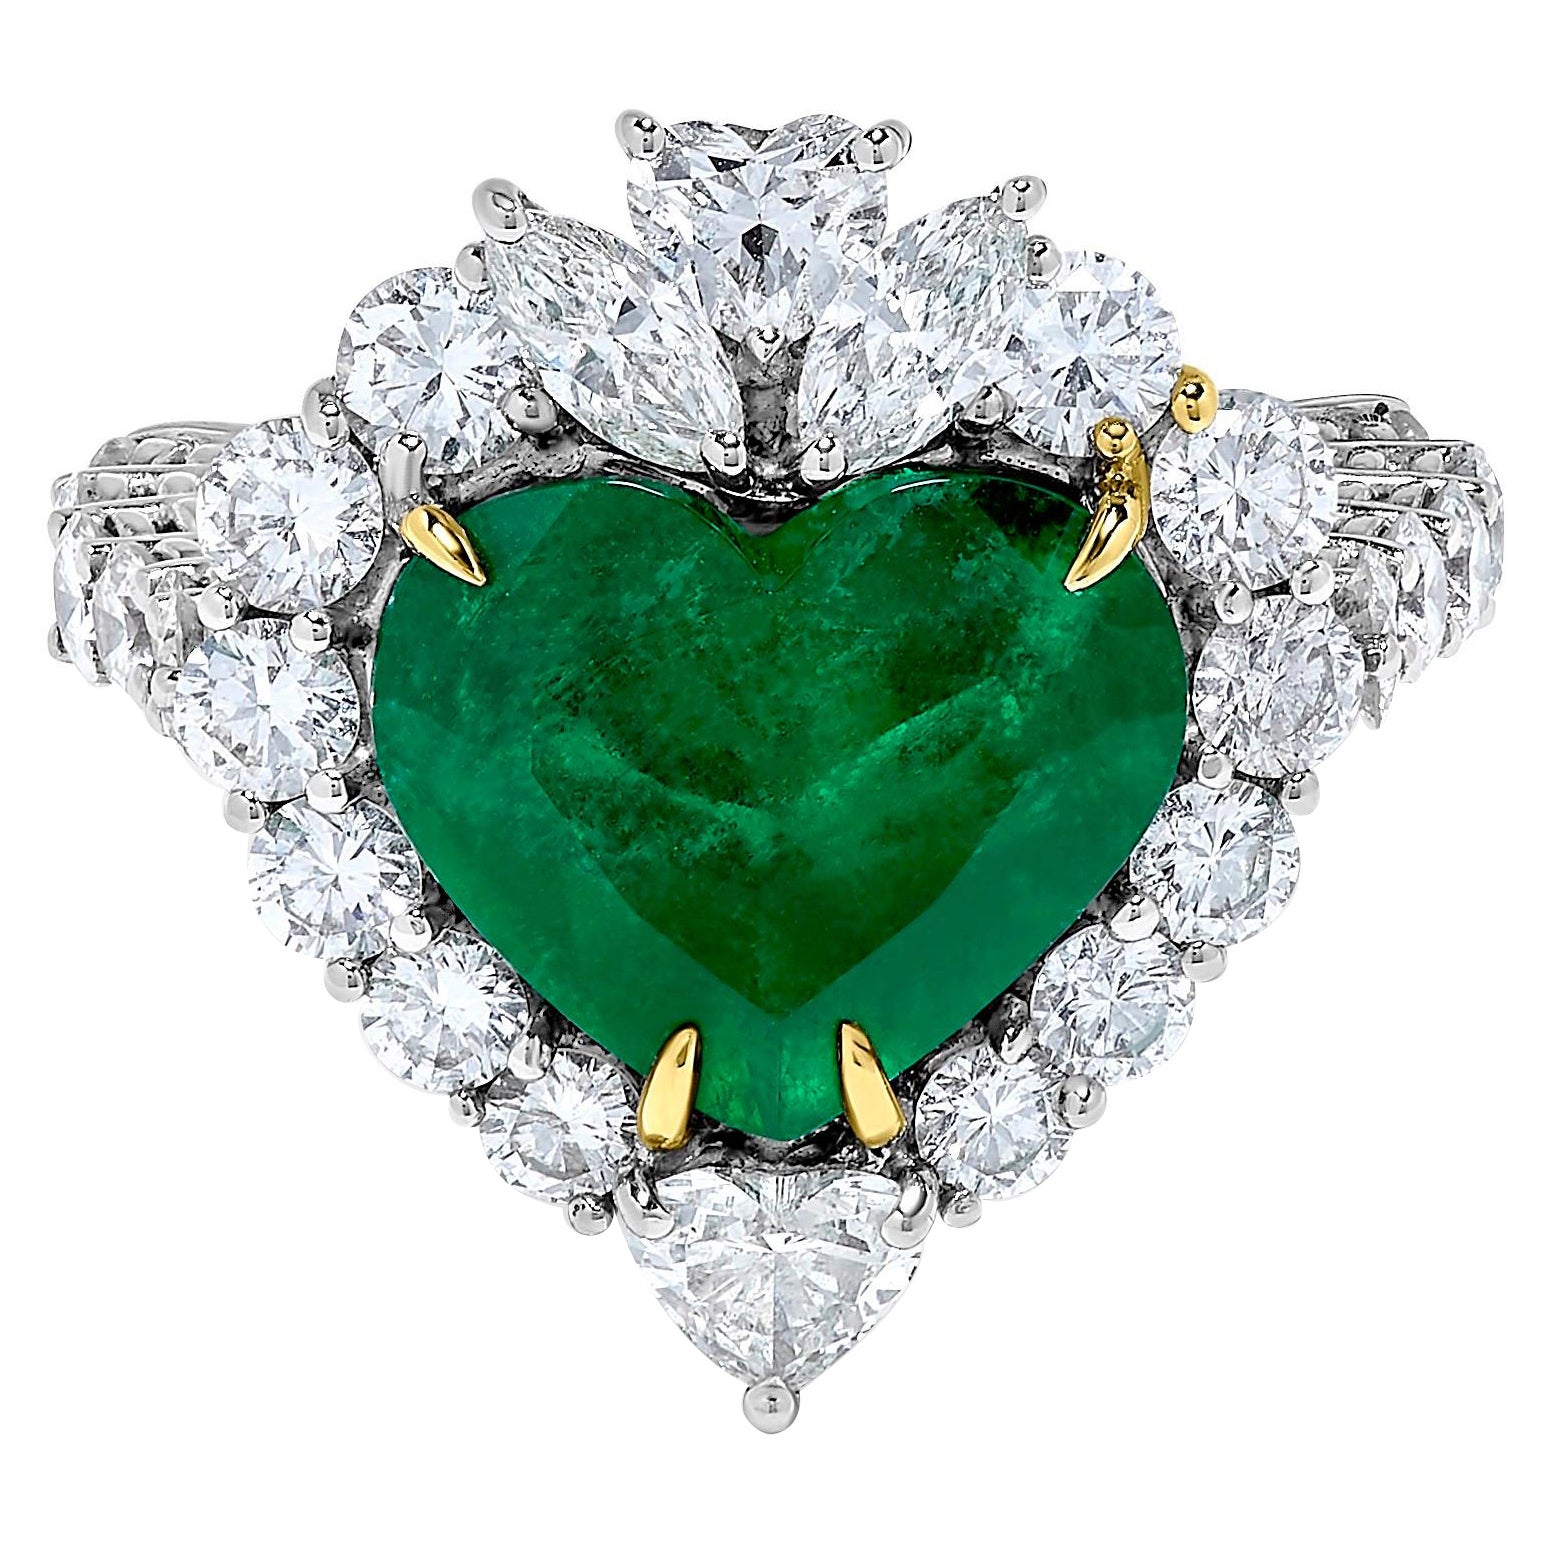 Emilio Jewelry Certified 6.00 Carat Colombian Muzo Vivid Green Diamond Ring